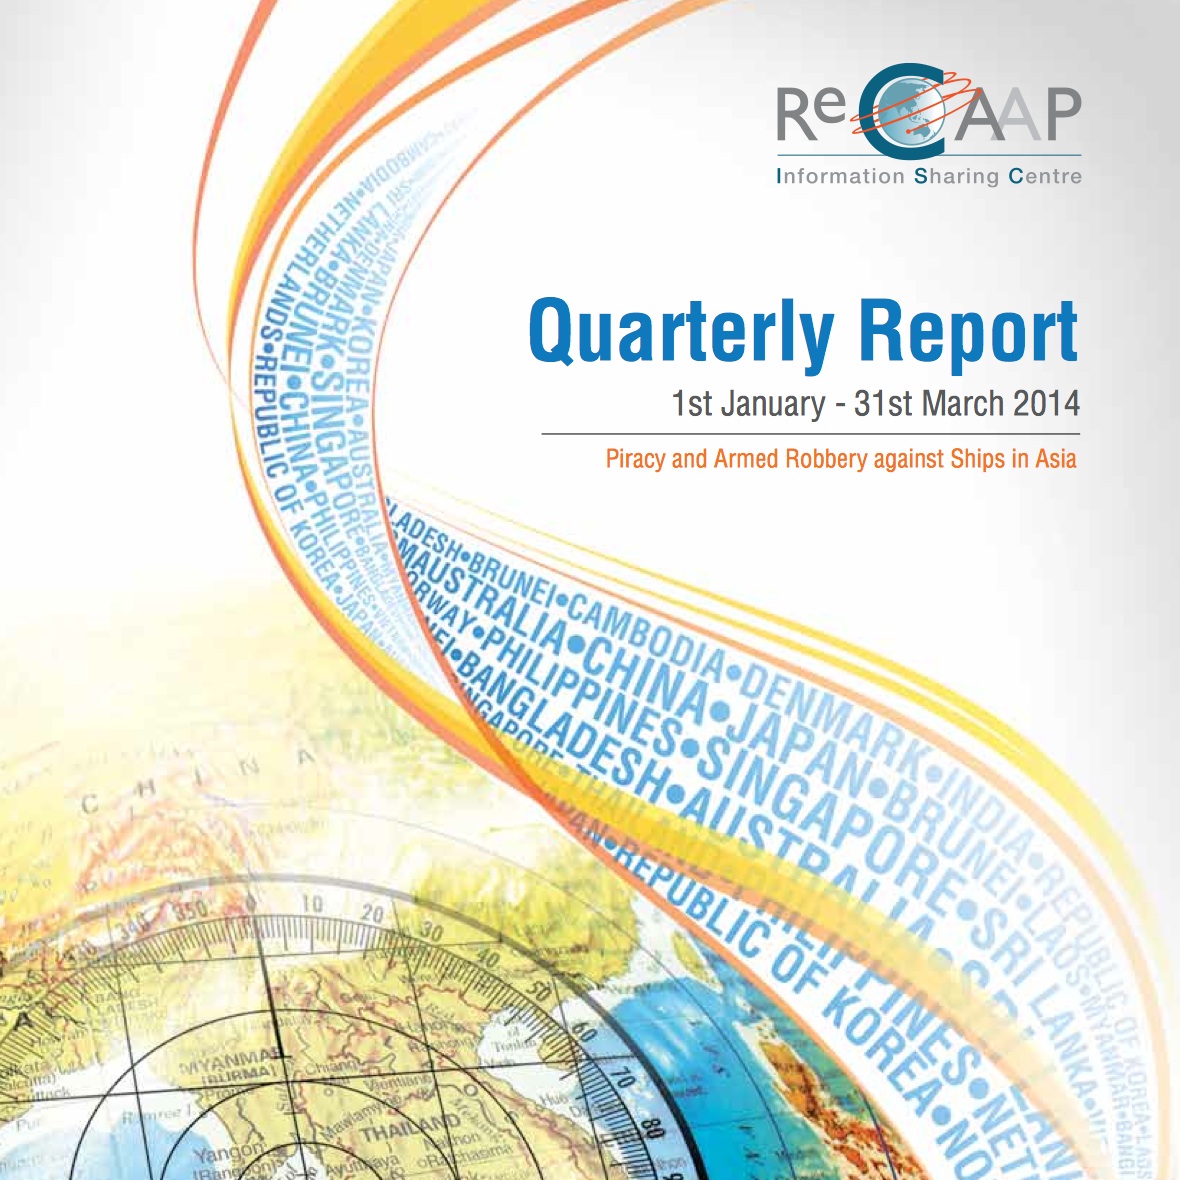 ReCAAP ISC 1 Quarterly Report 2014 Image: ReCAAP